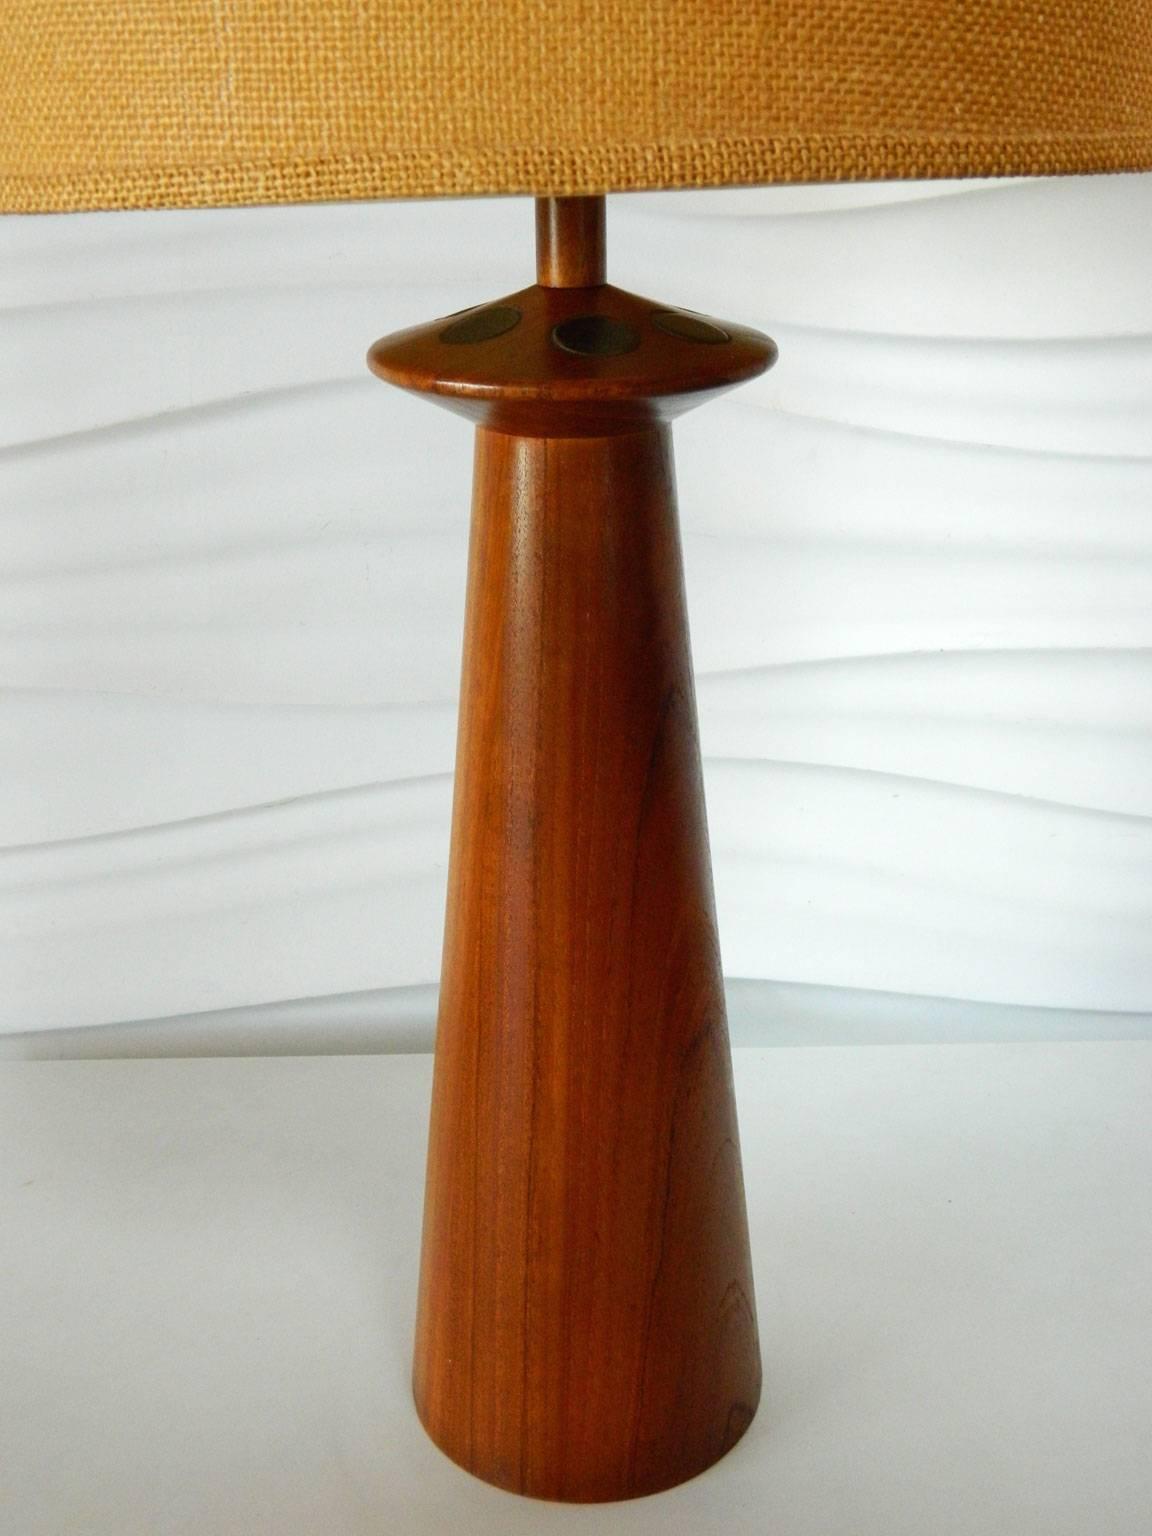 Designed by Gordon and Jane Martz, this walnut lamp features round, matte black ceramic tile inserts.